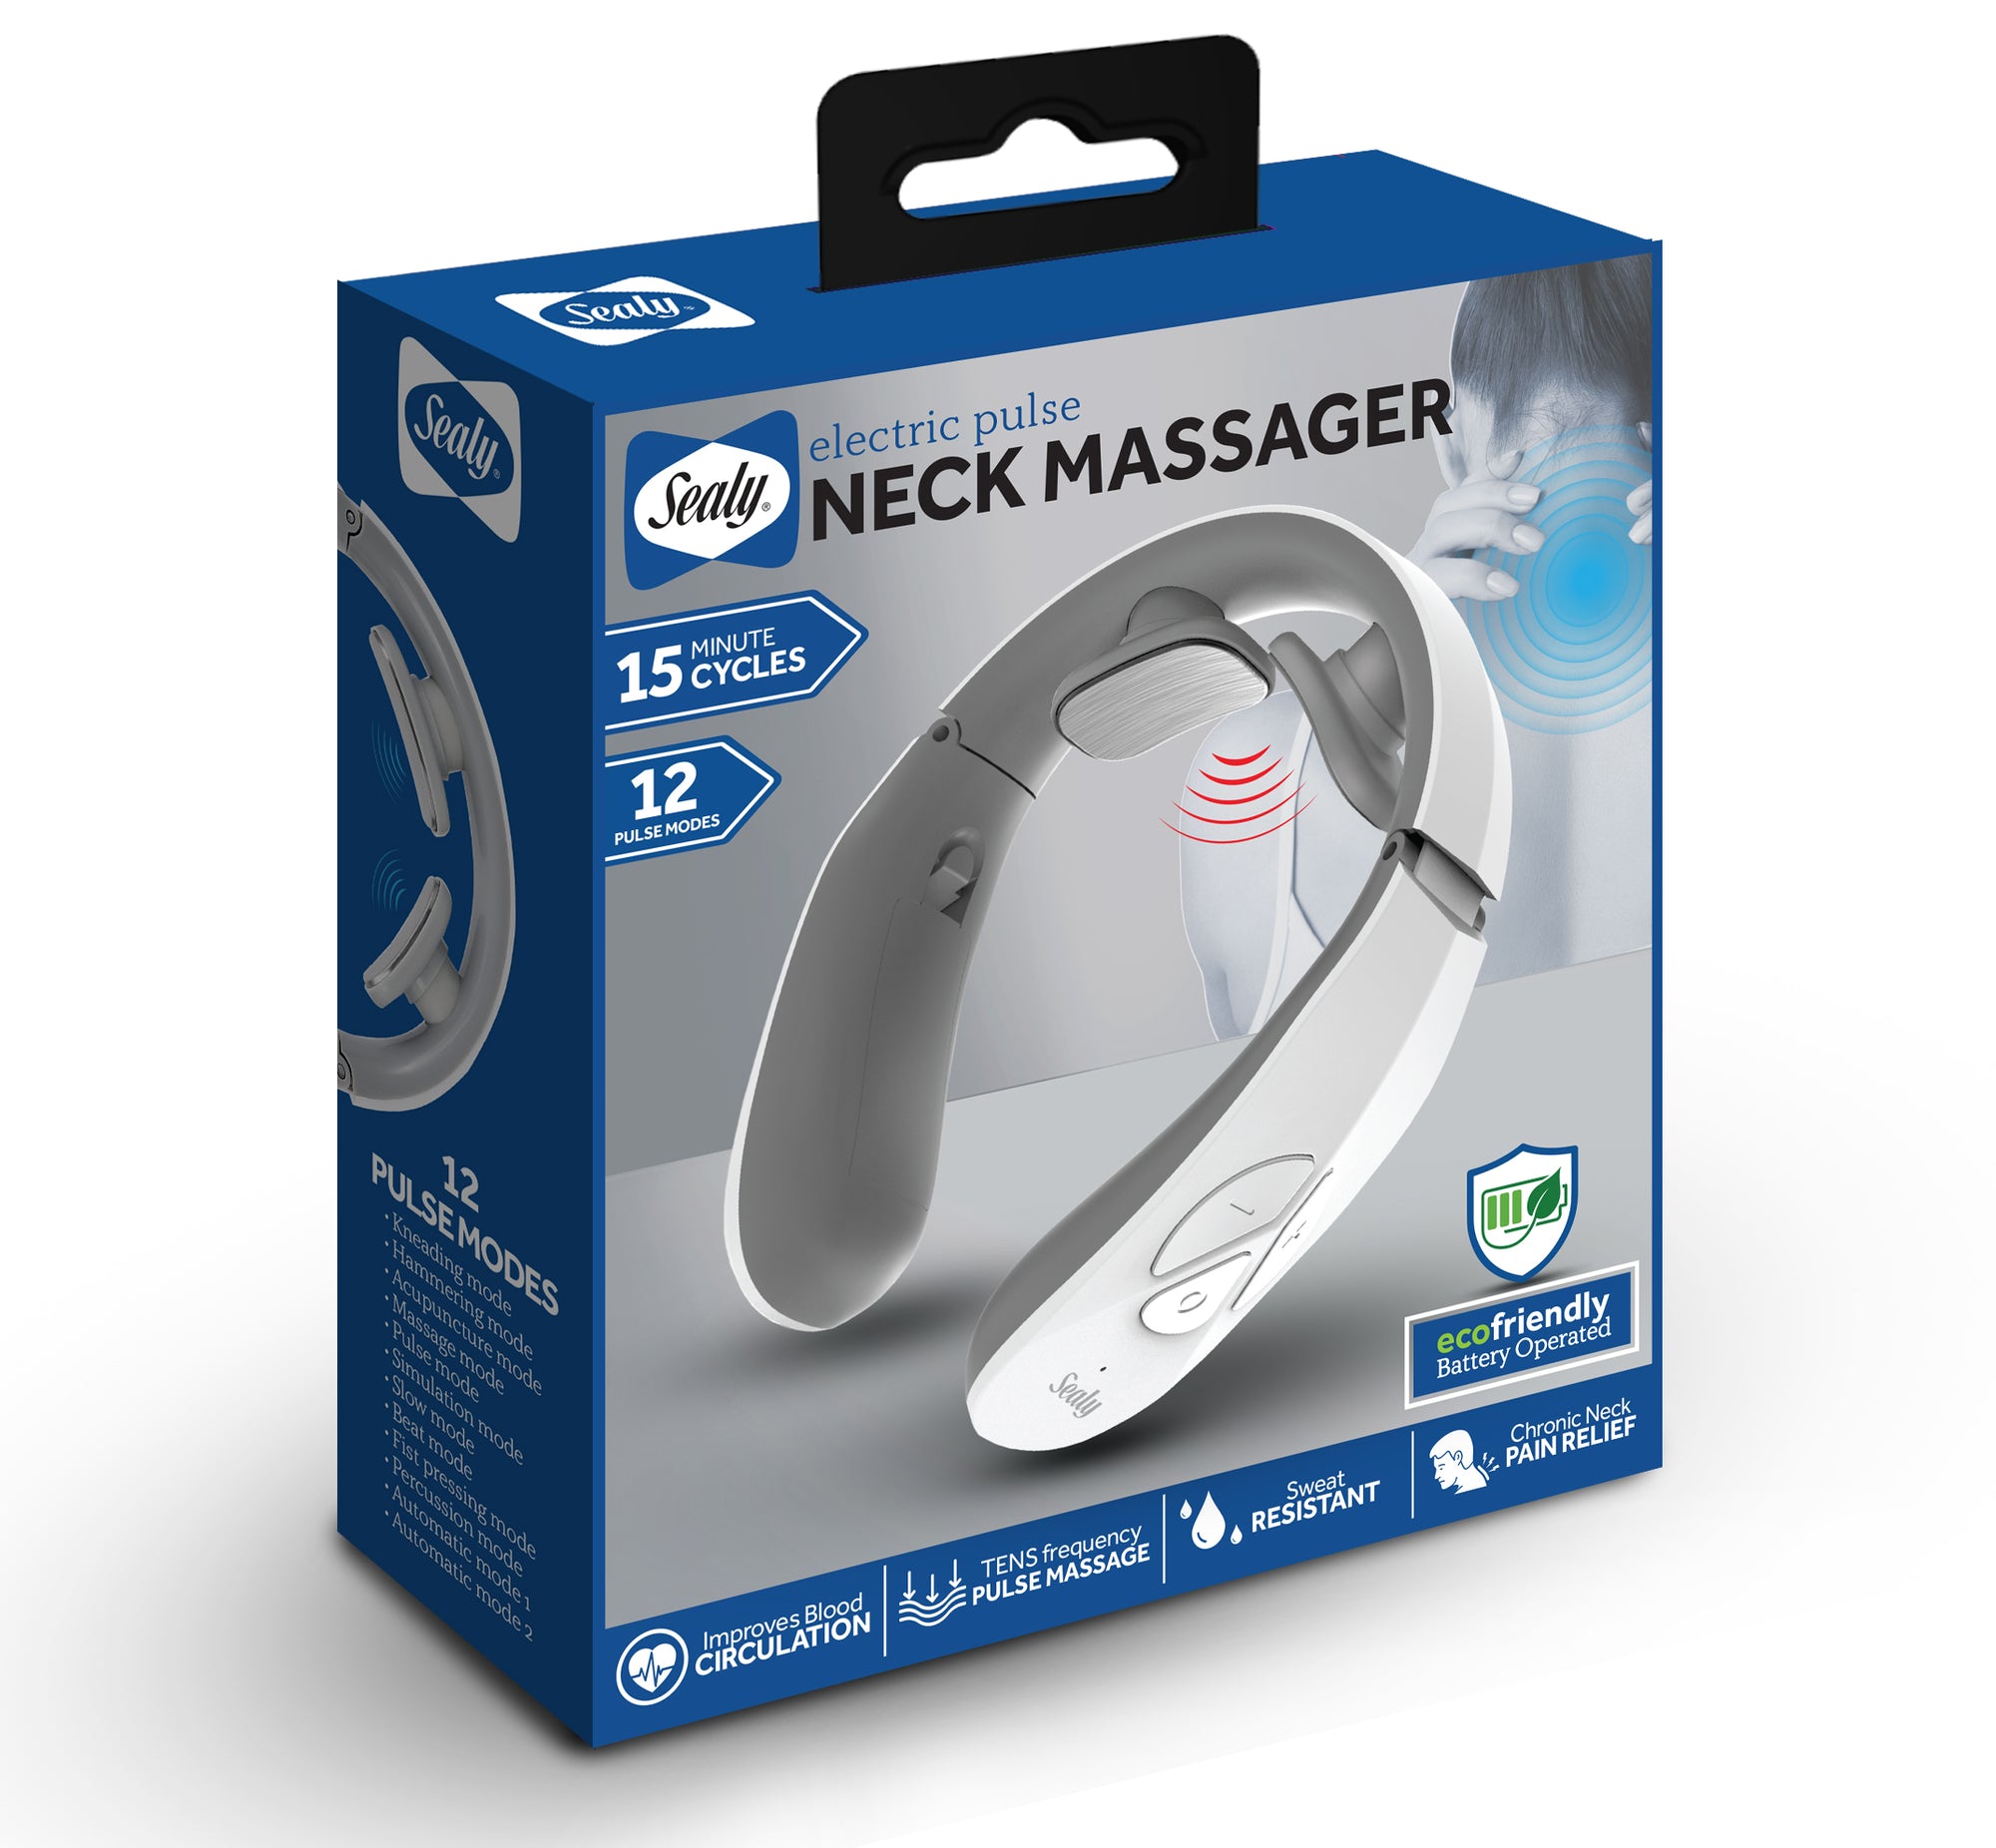 New Neck Massager-Electric Neck Pulse Massager .